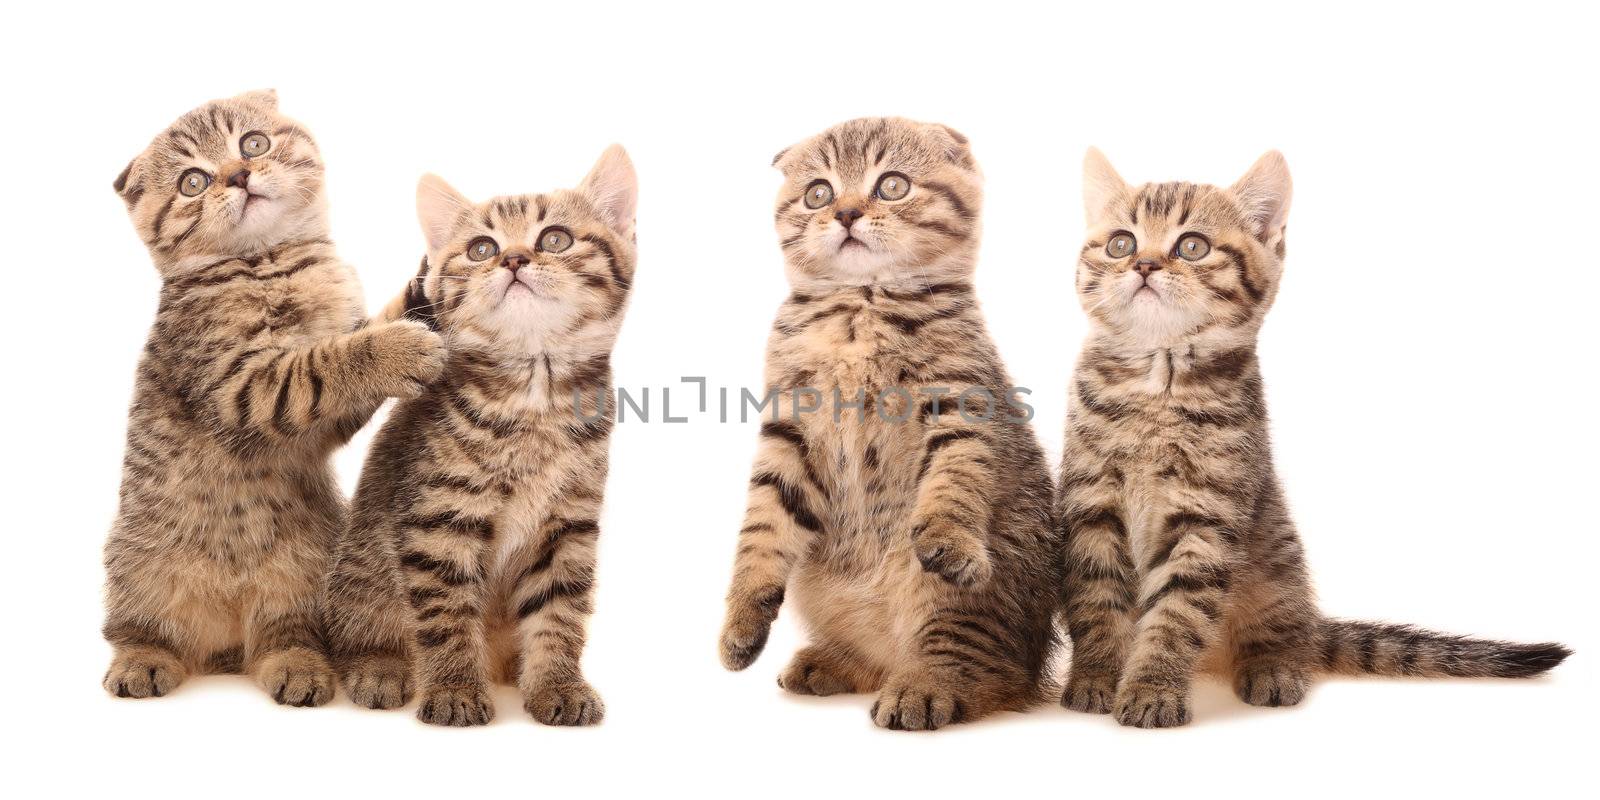 Scottish kittens in funny poses by ksenish